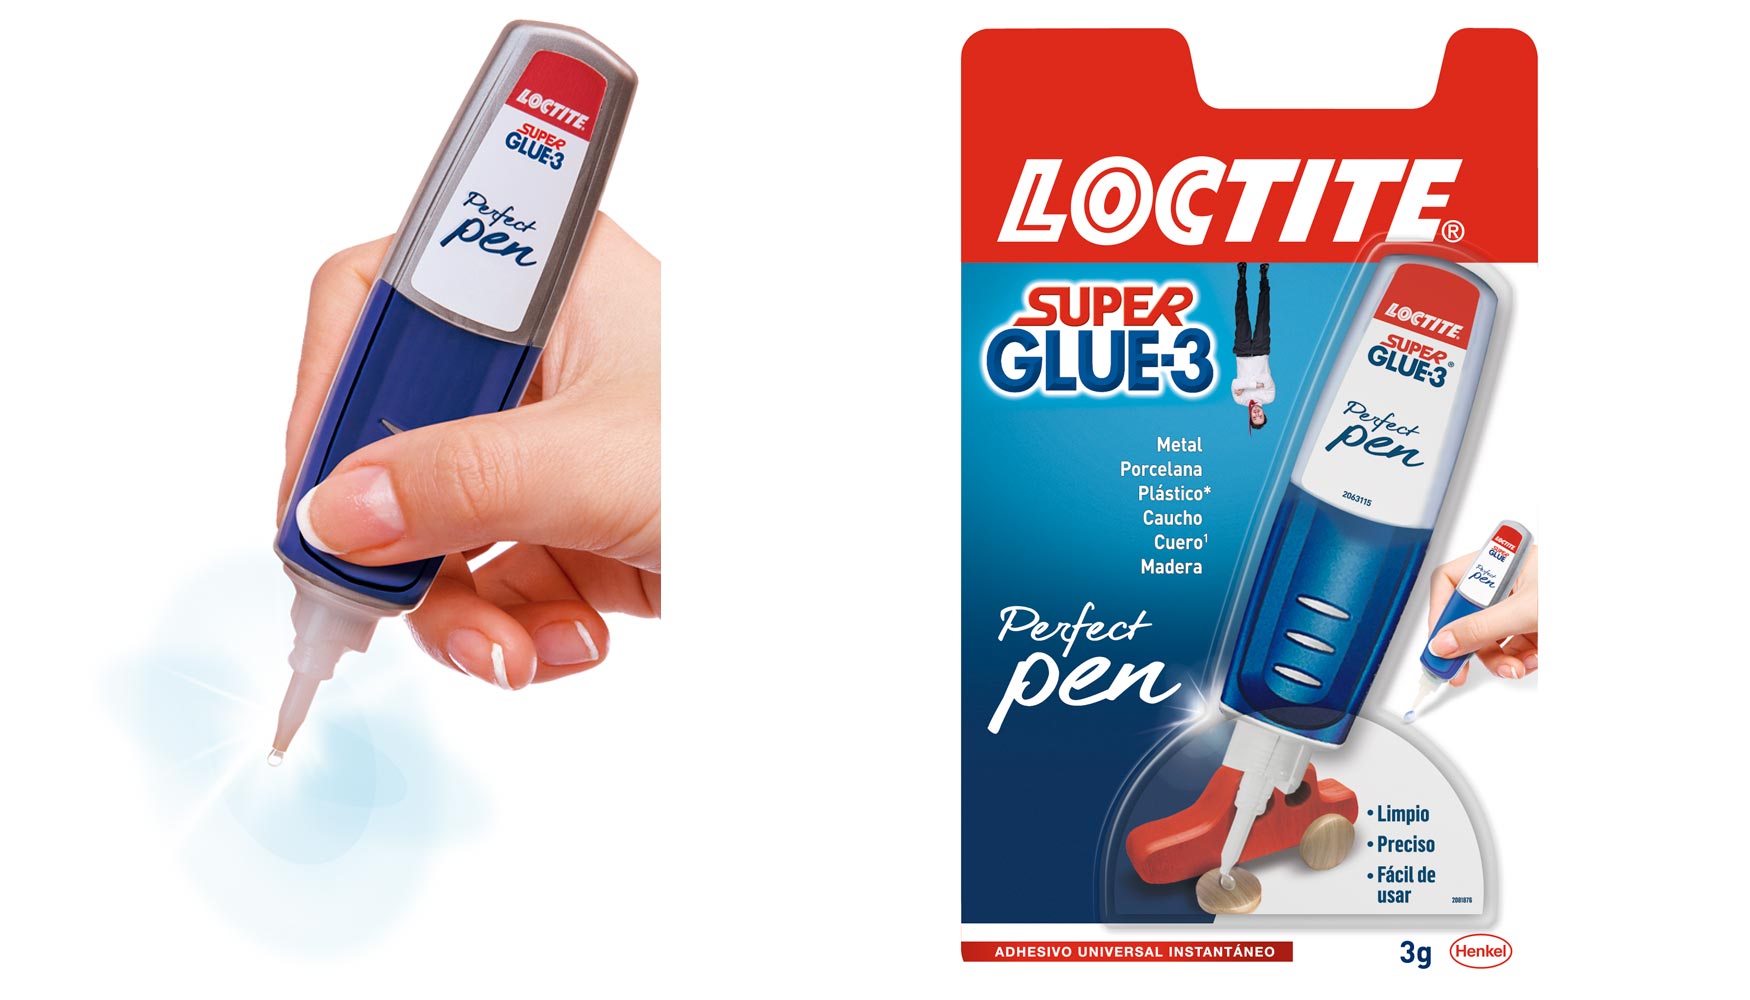 Loctite Super Glue-3 Perfect Pen, tan fácil como escribir - Ferretería